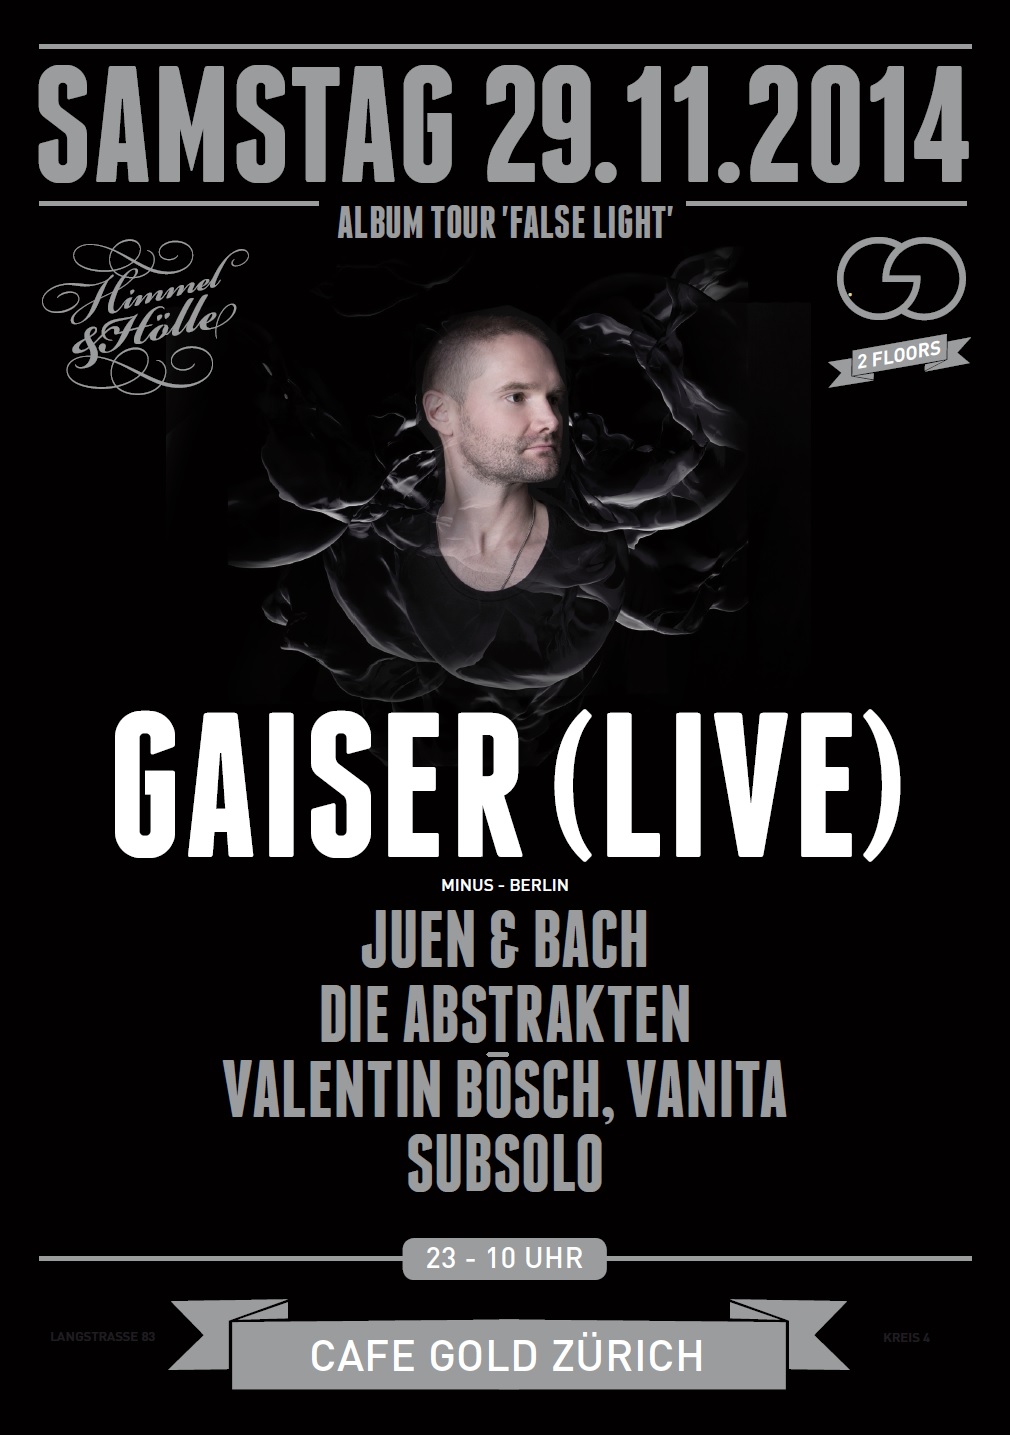 {de}Himmel & Hölle präsentiert Gaiser Live - Albumtour "False Light"{/de}